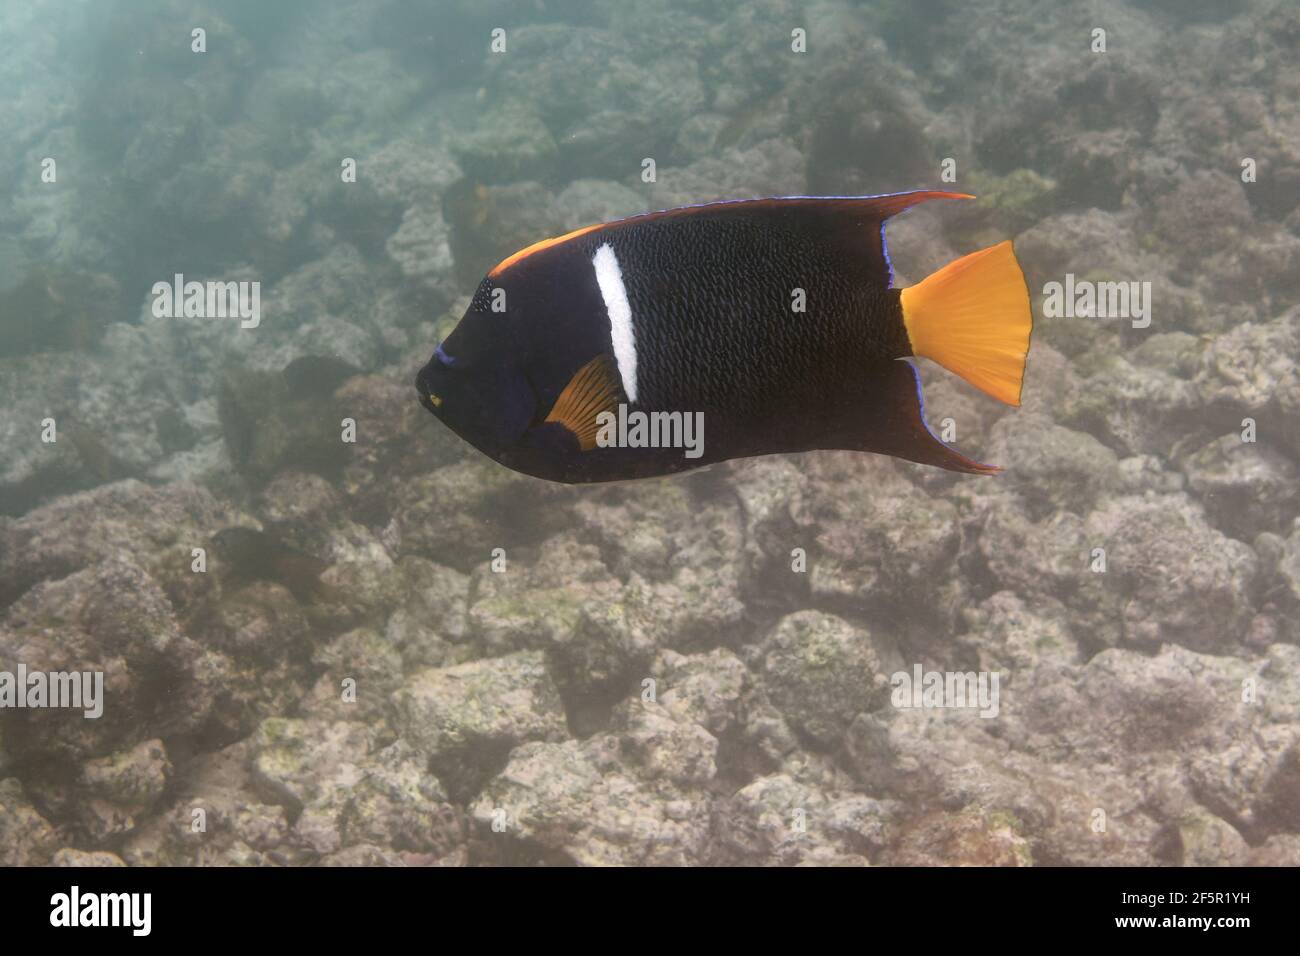 king angelfish or passer angelfish (Holacanthus passer) - Galapagos Islands, Ecuador Stock Photo